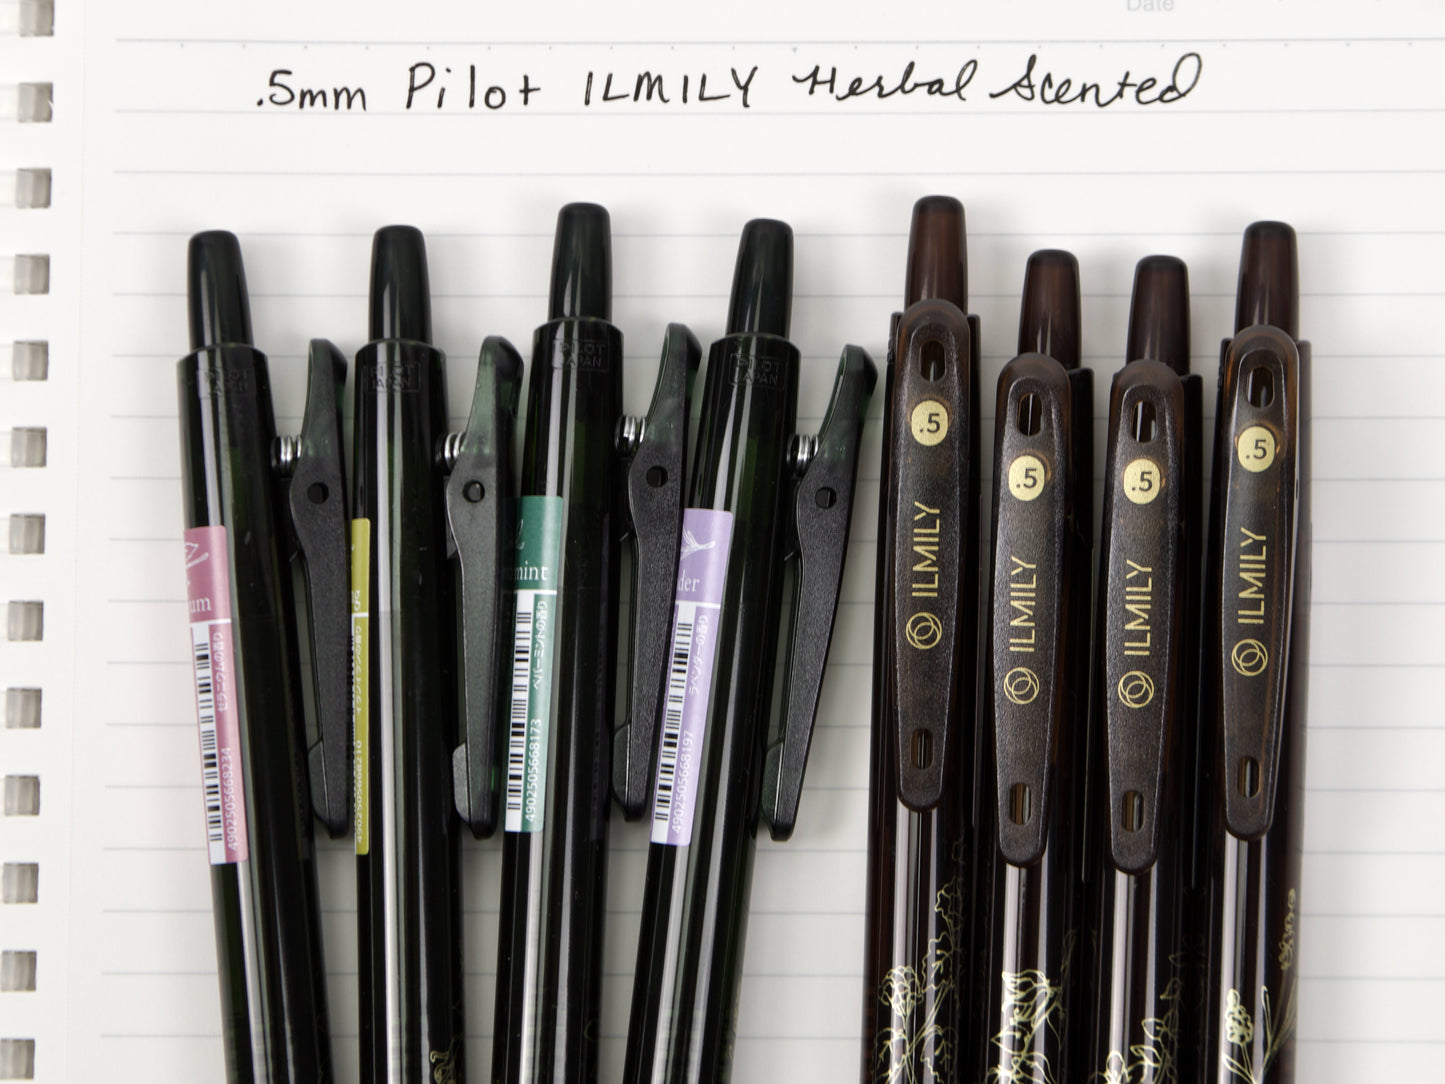 Pilot ILMILY Herbal Scented Gel Pen Singles